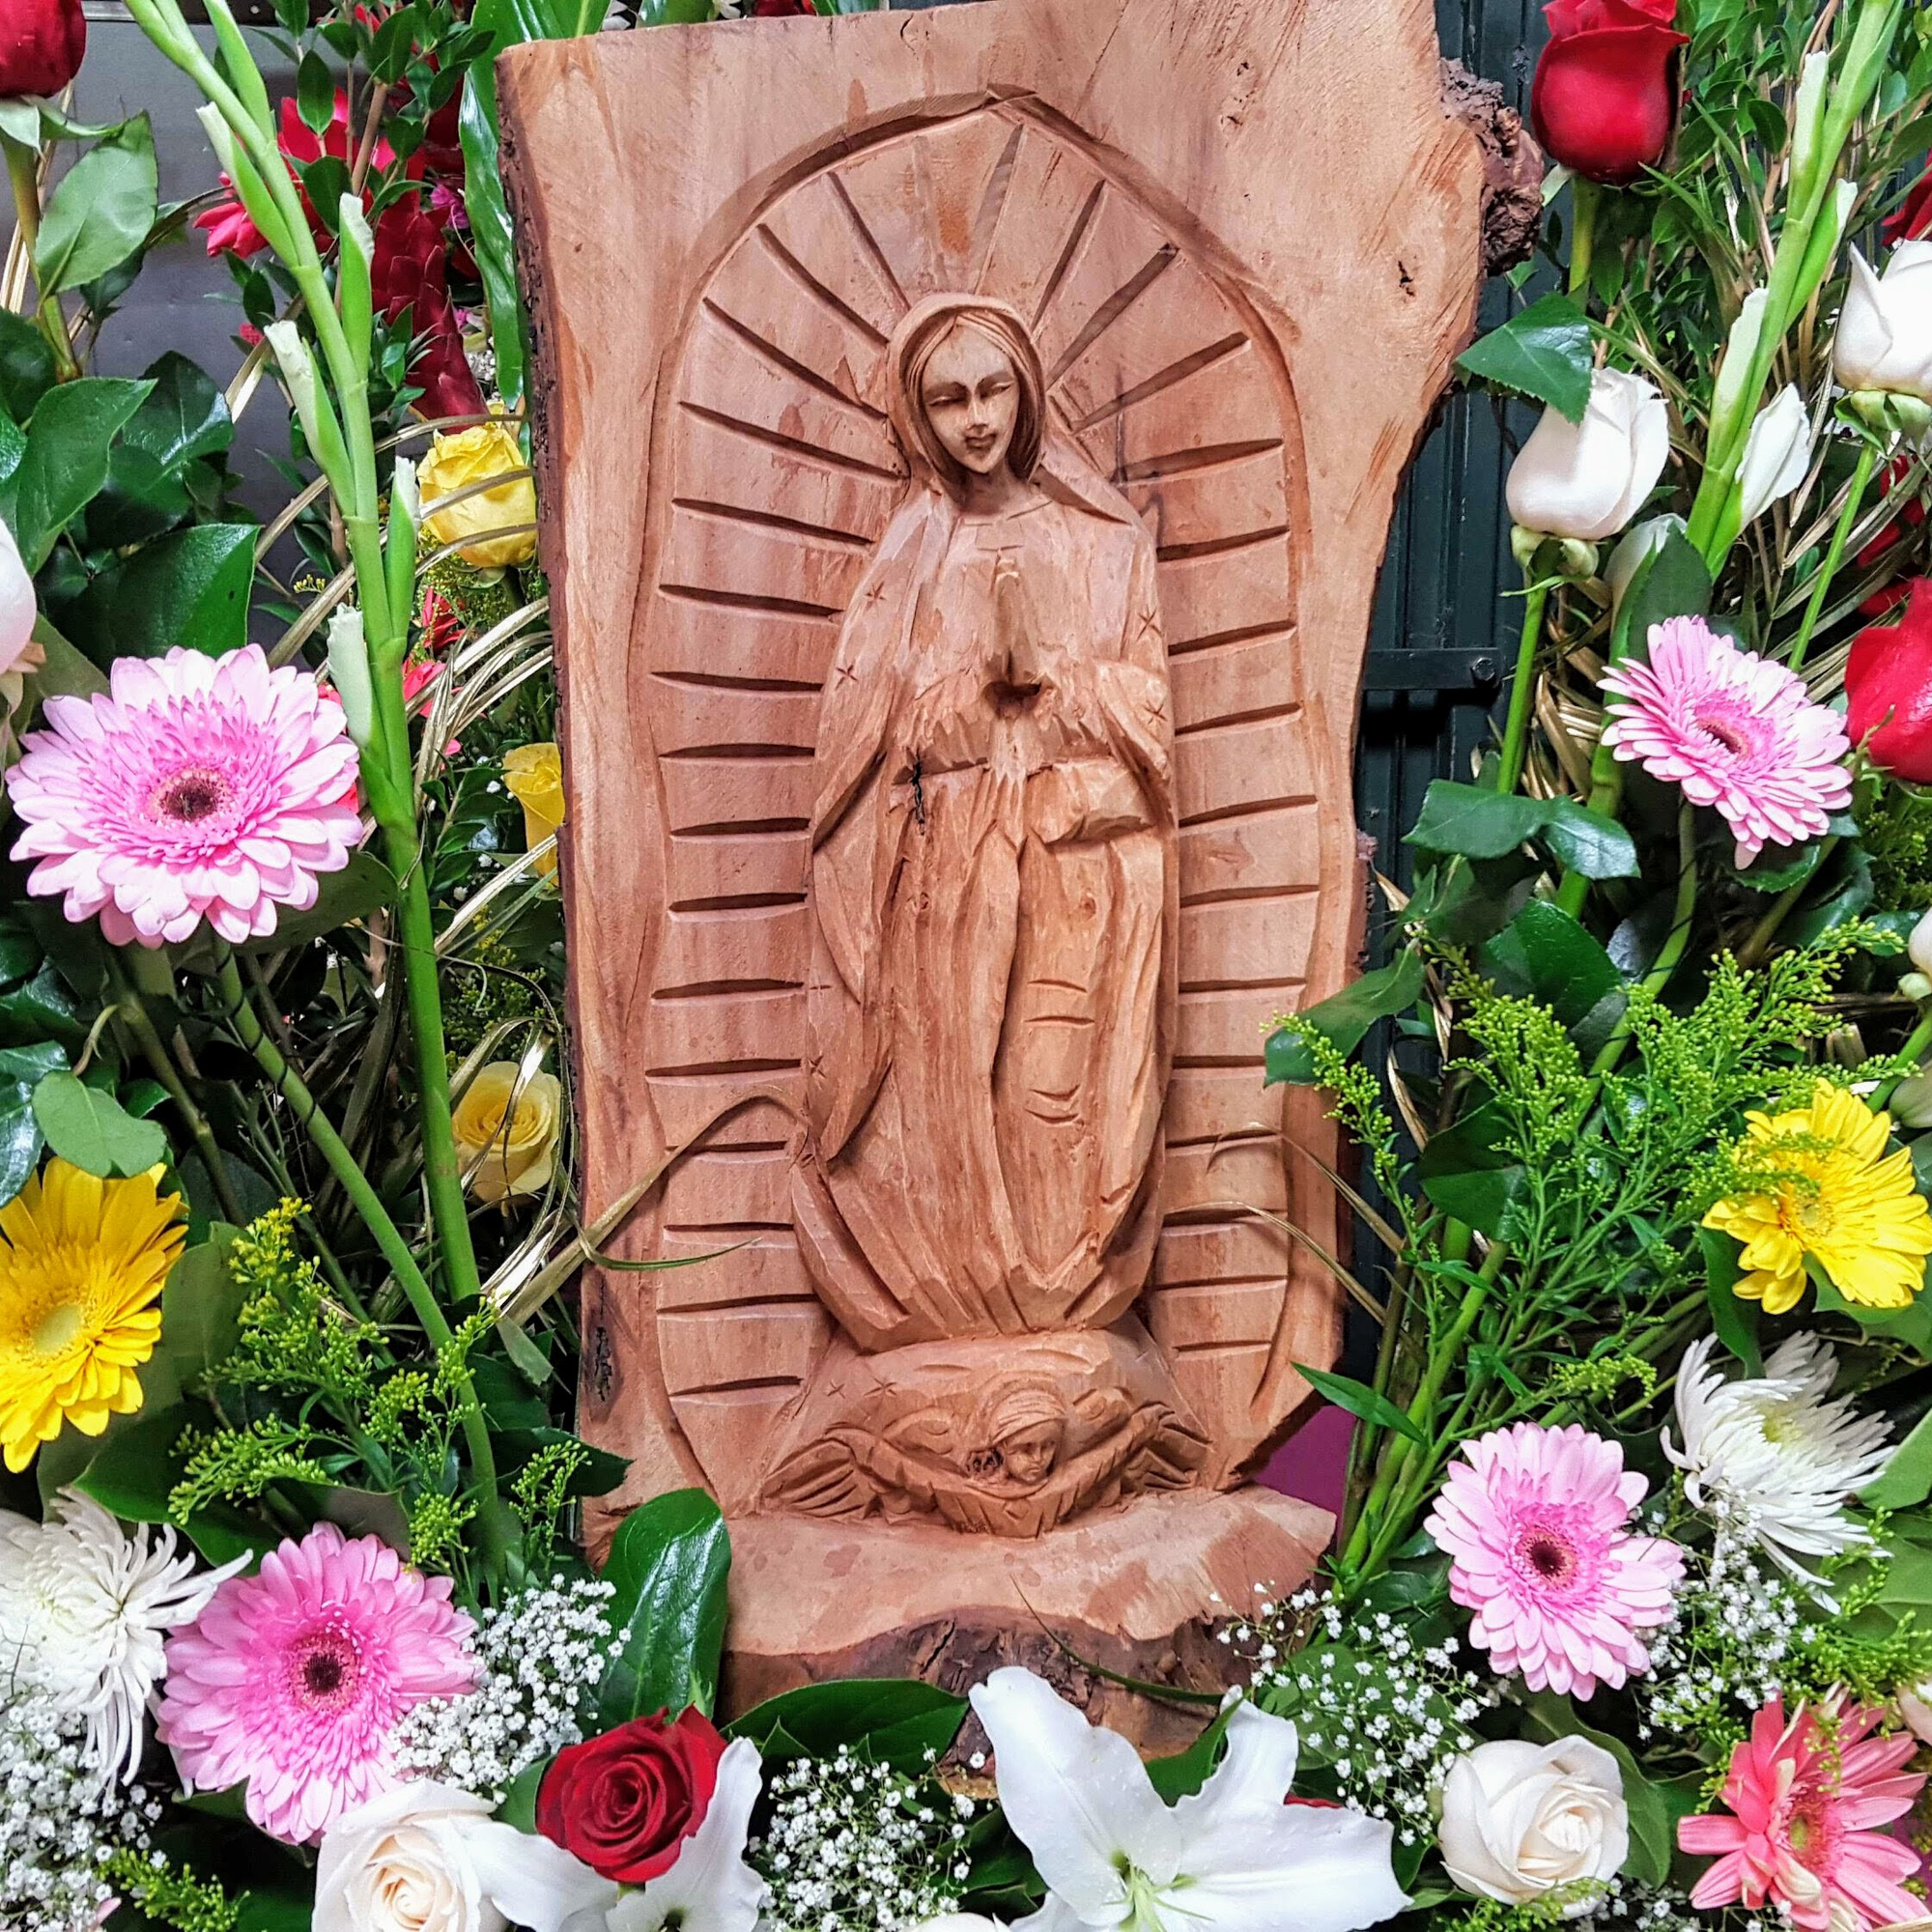 Bright Festive Gerber Daisies Adorn Andrews Wholesale Flowers Virgin of Guadalupe Shrine At CFM